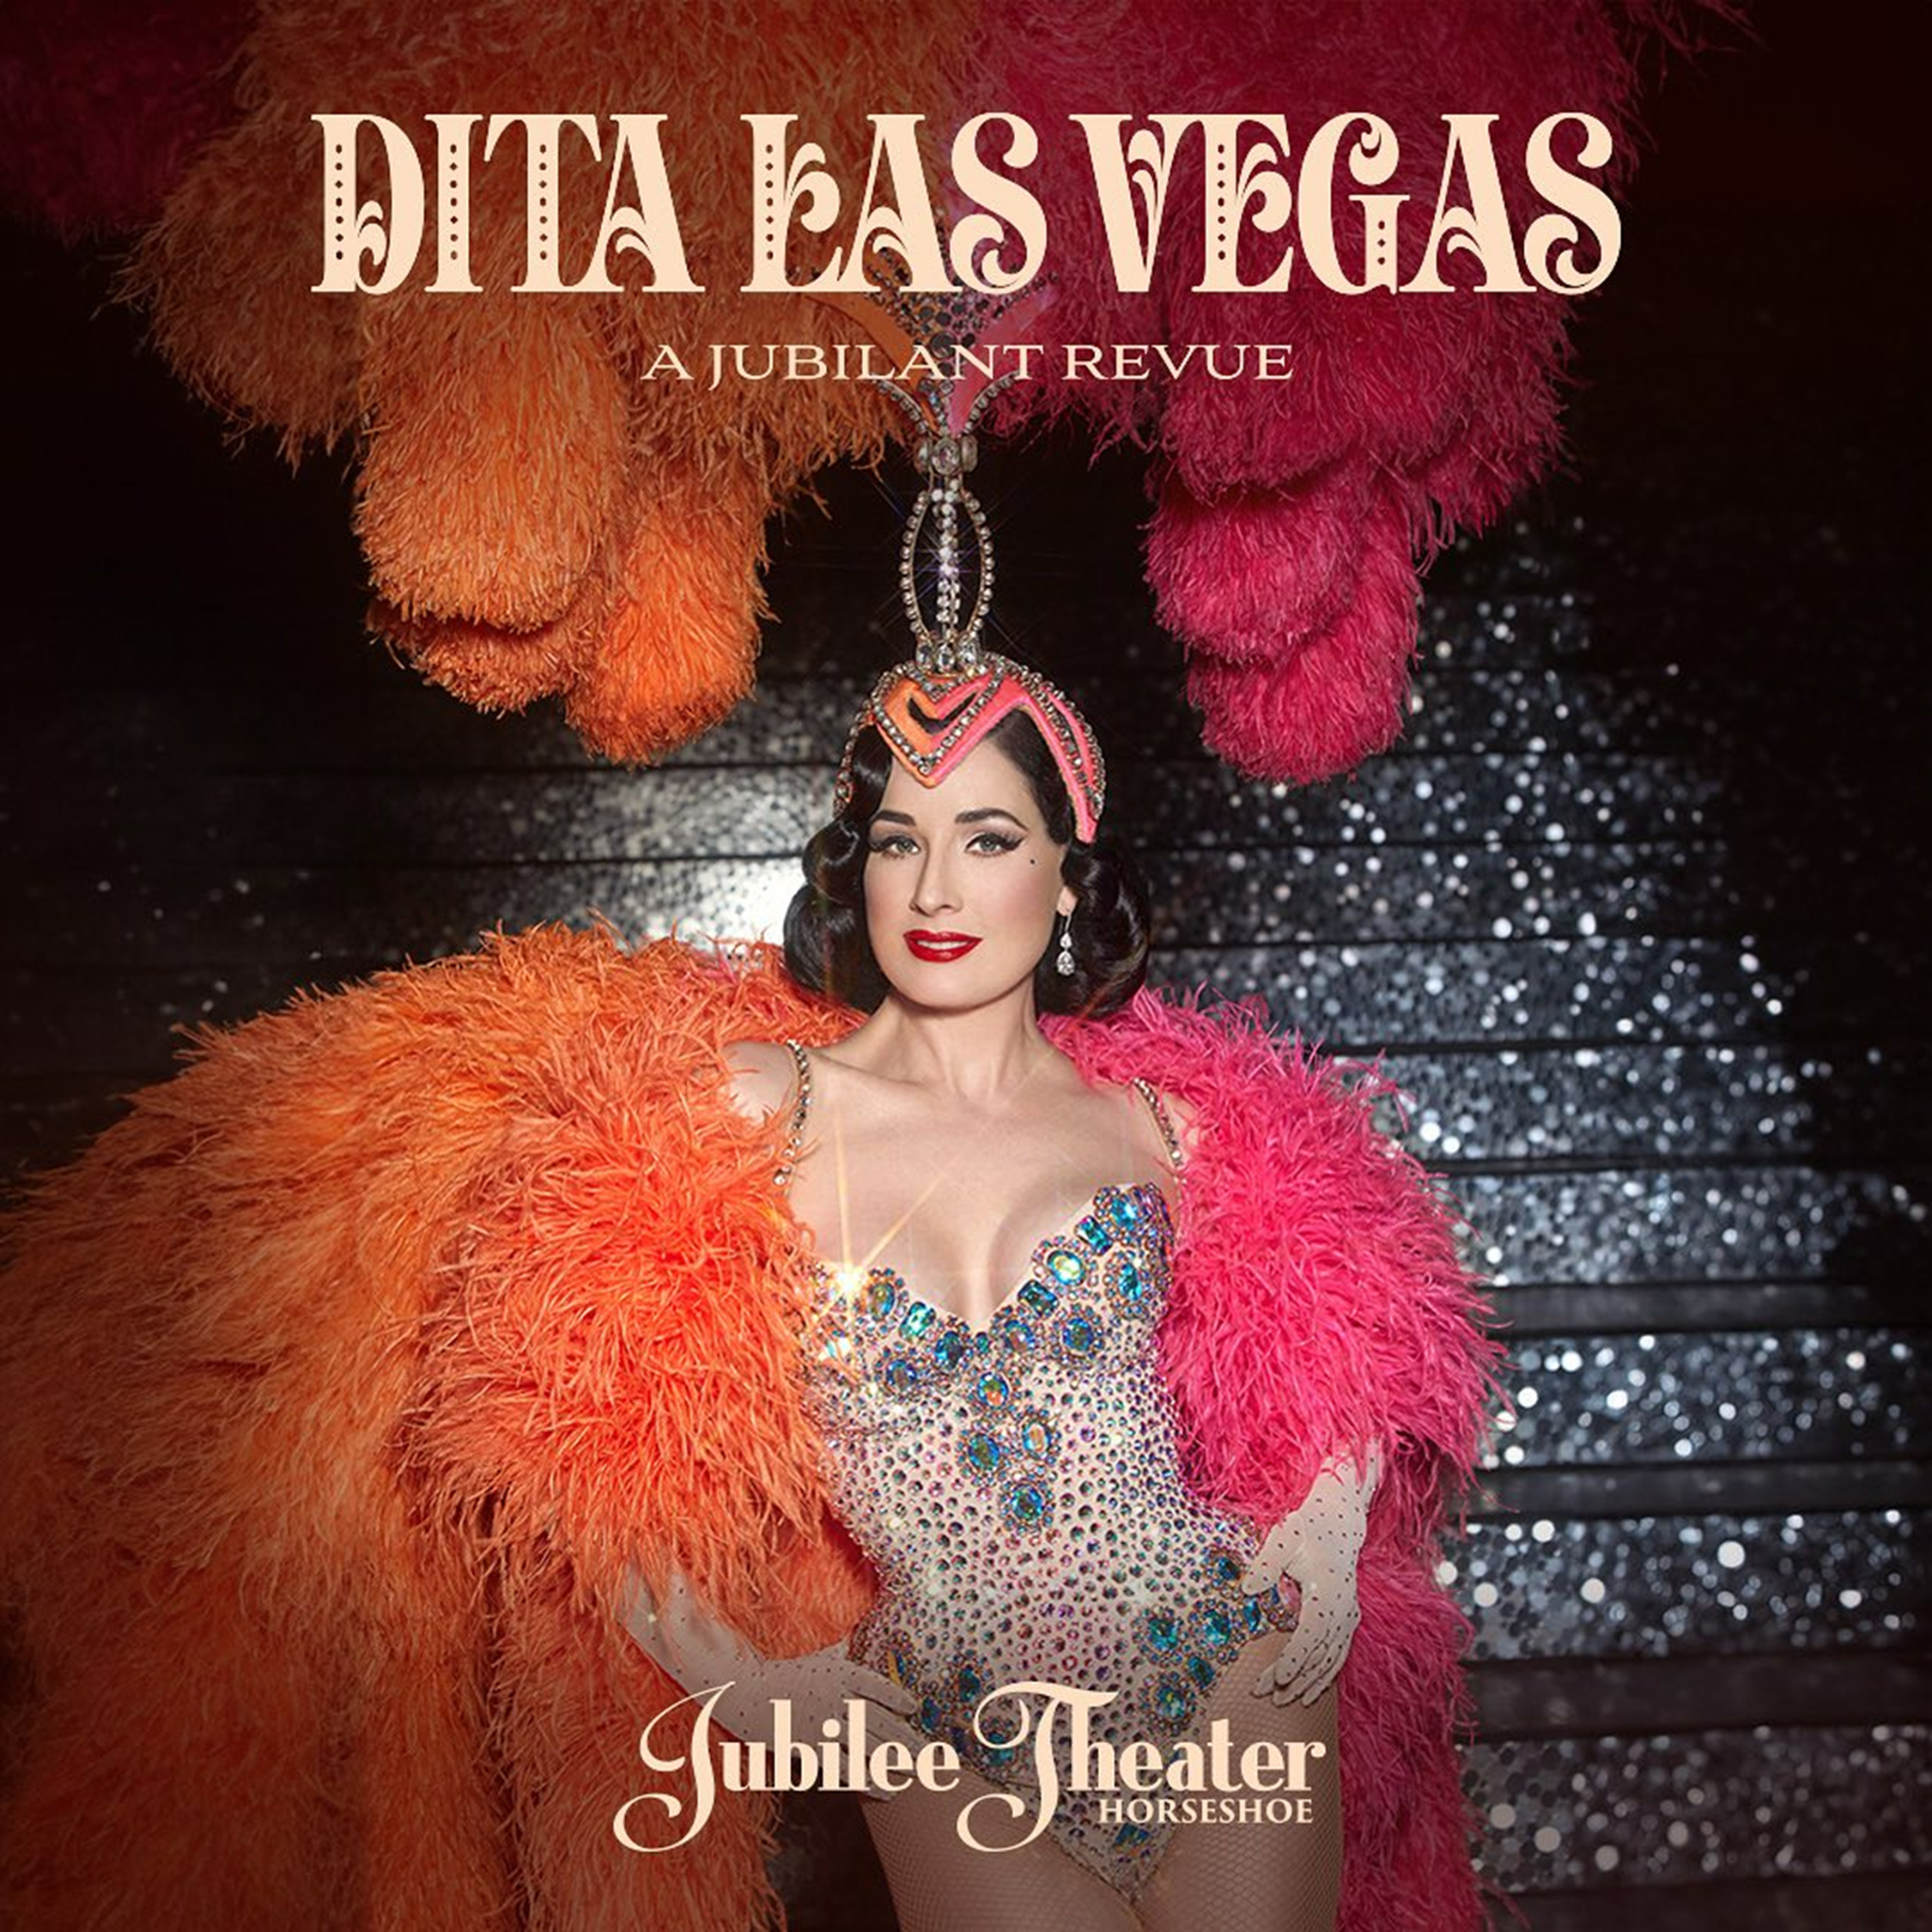 Ditas Show wird am 5. Oktober im Jubilee Theater eröffnet